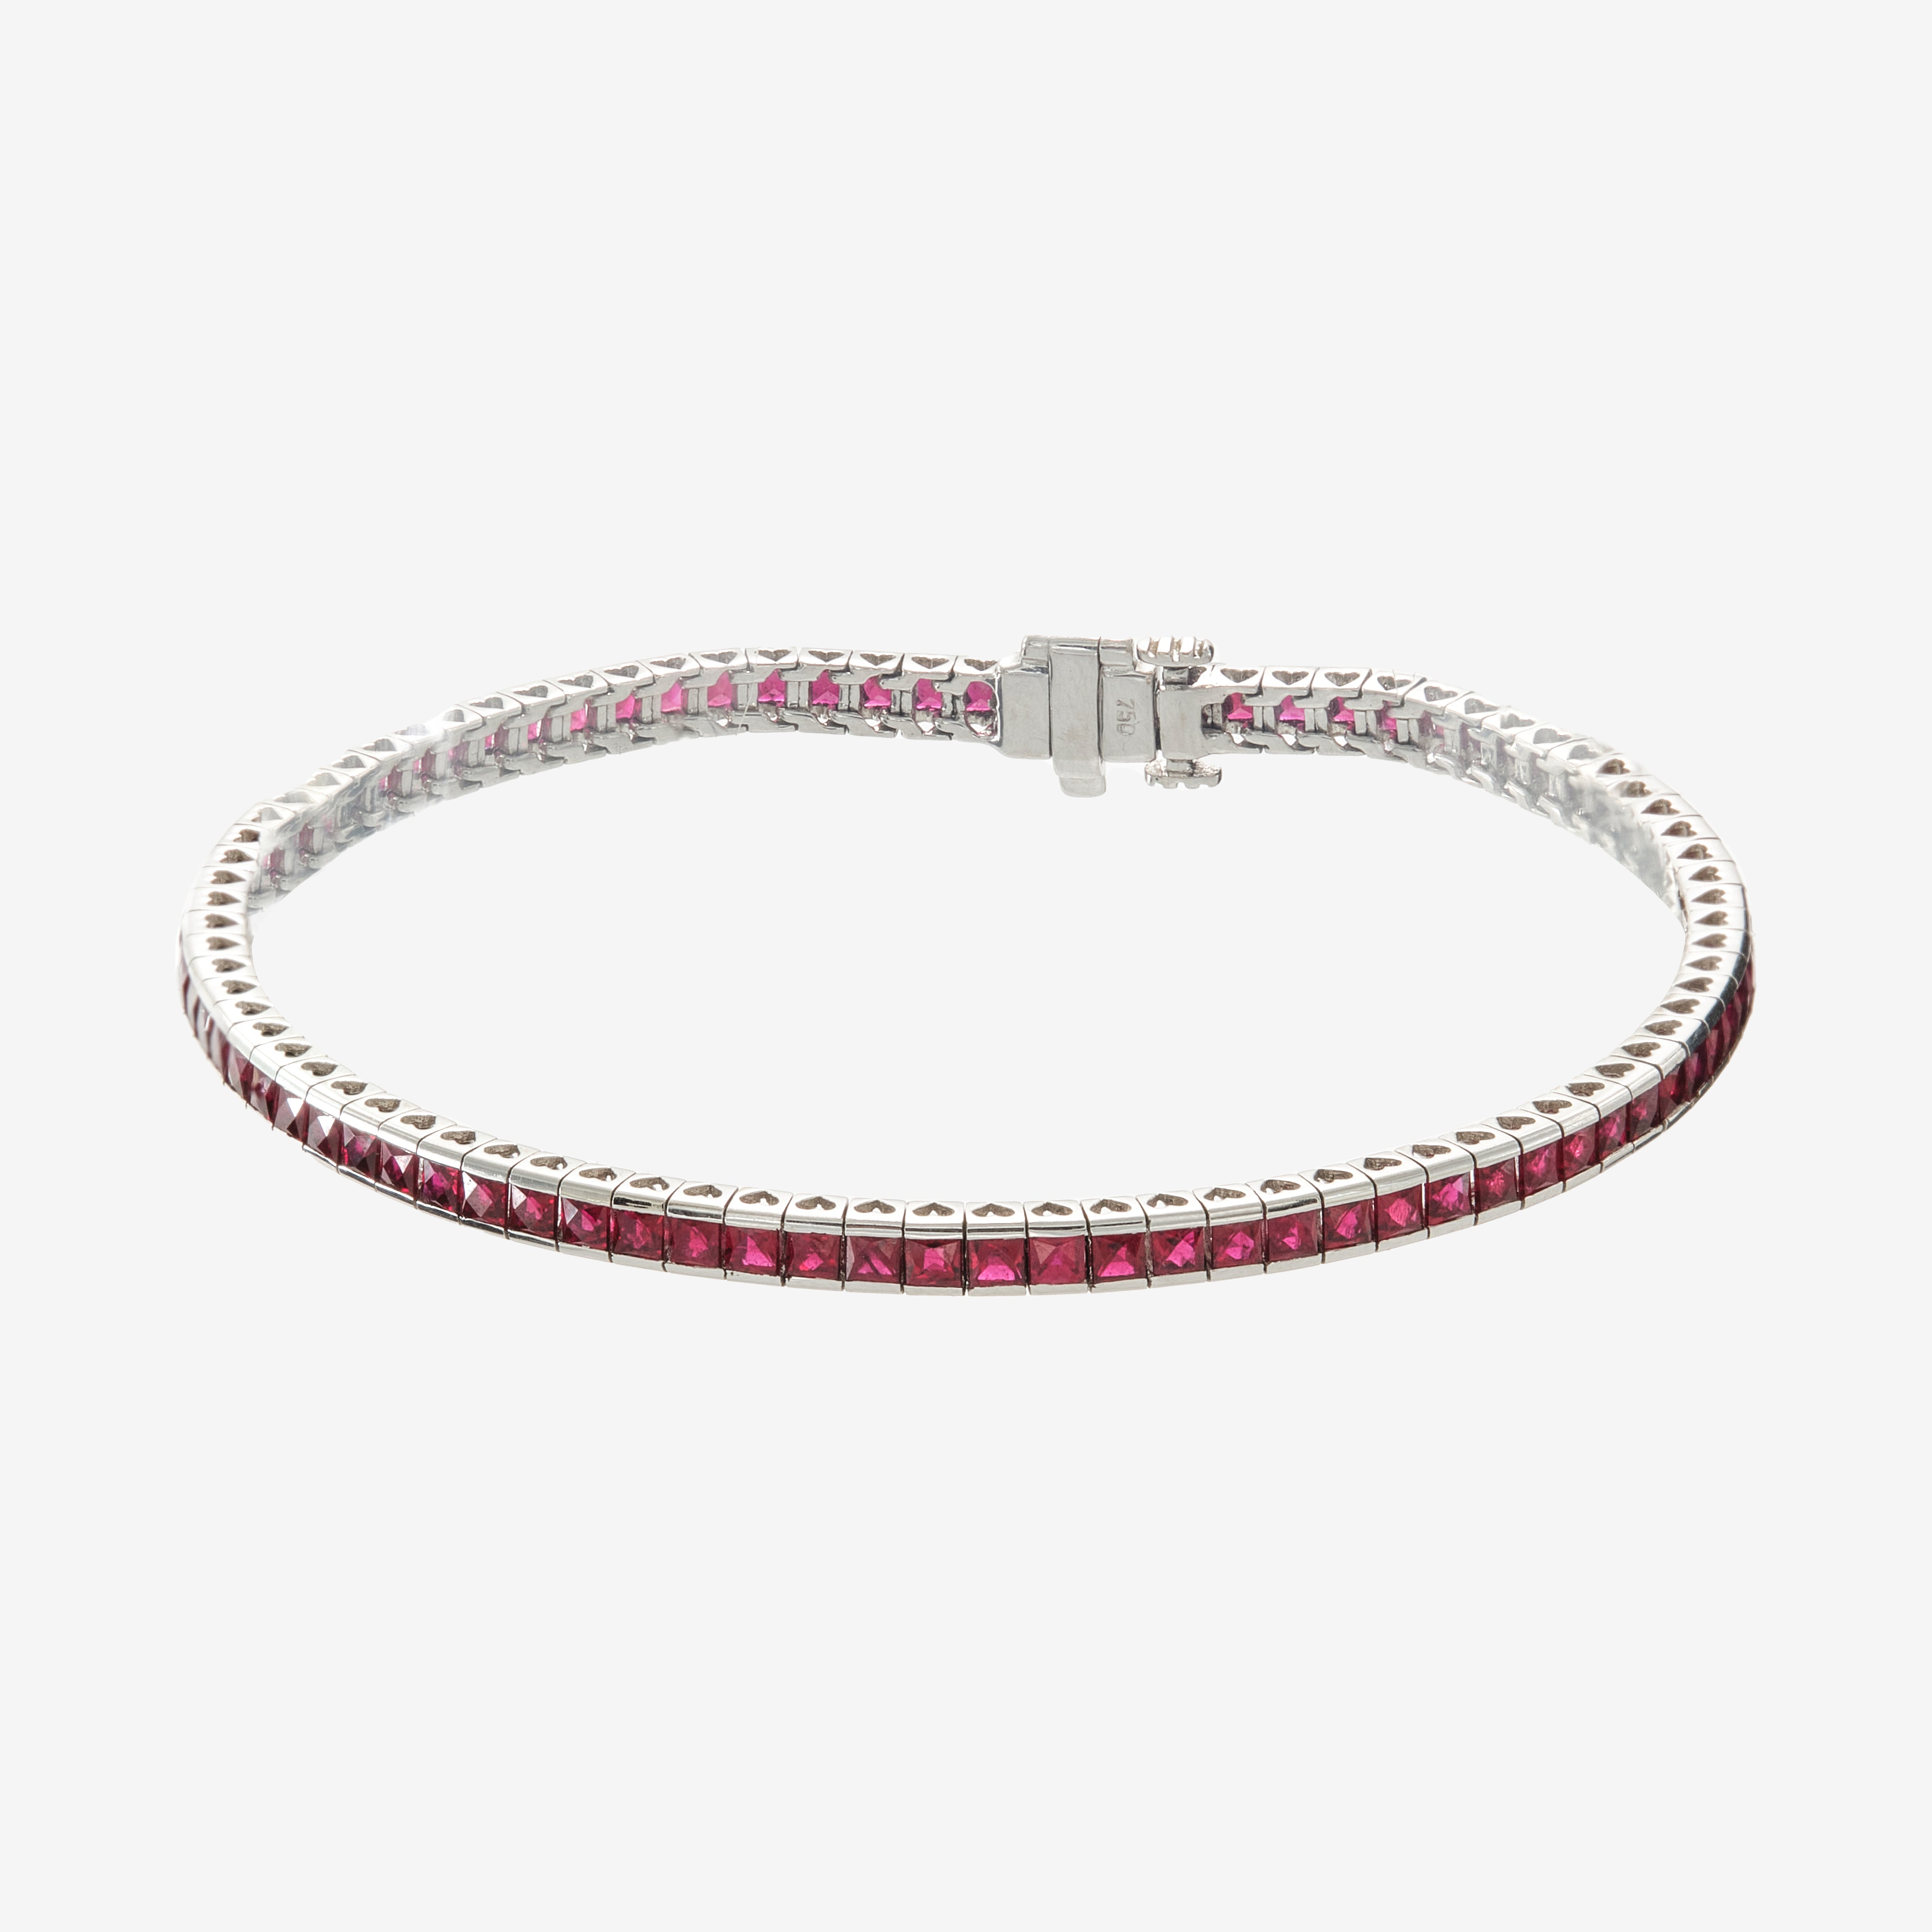 Tennis bracelet with rubies